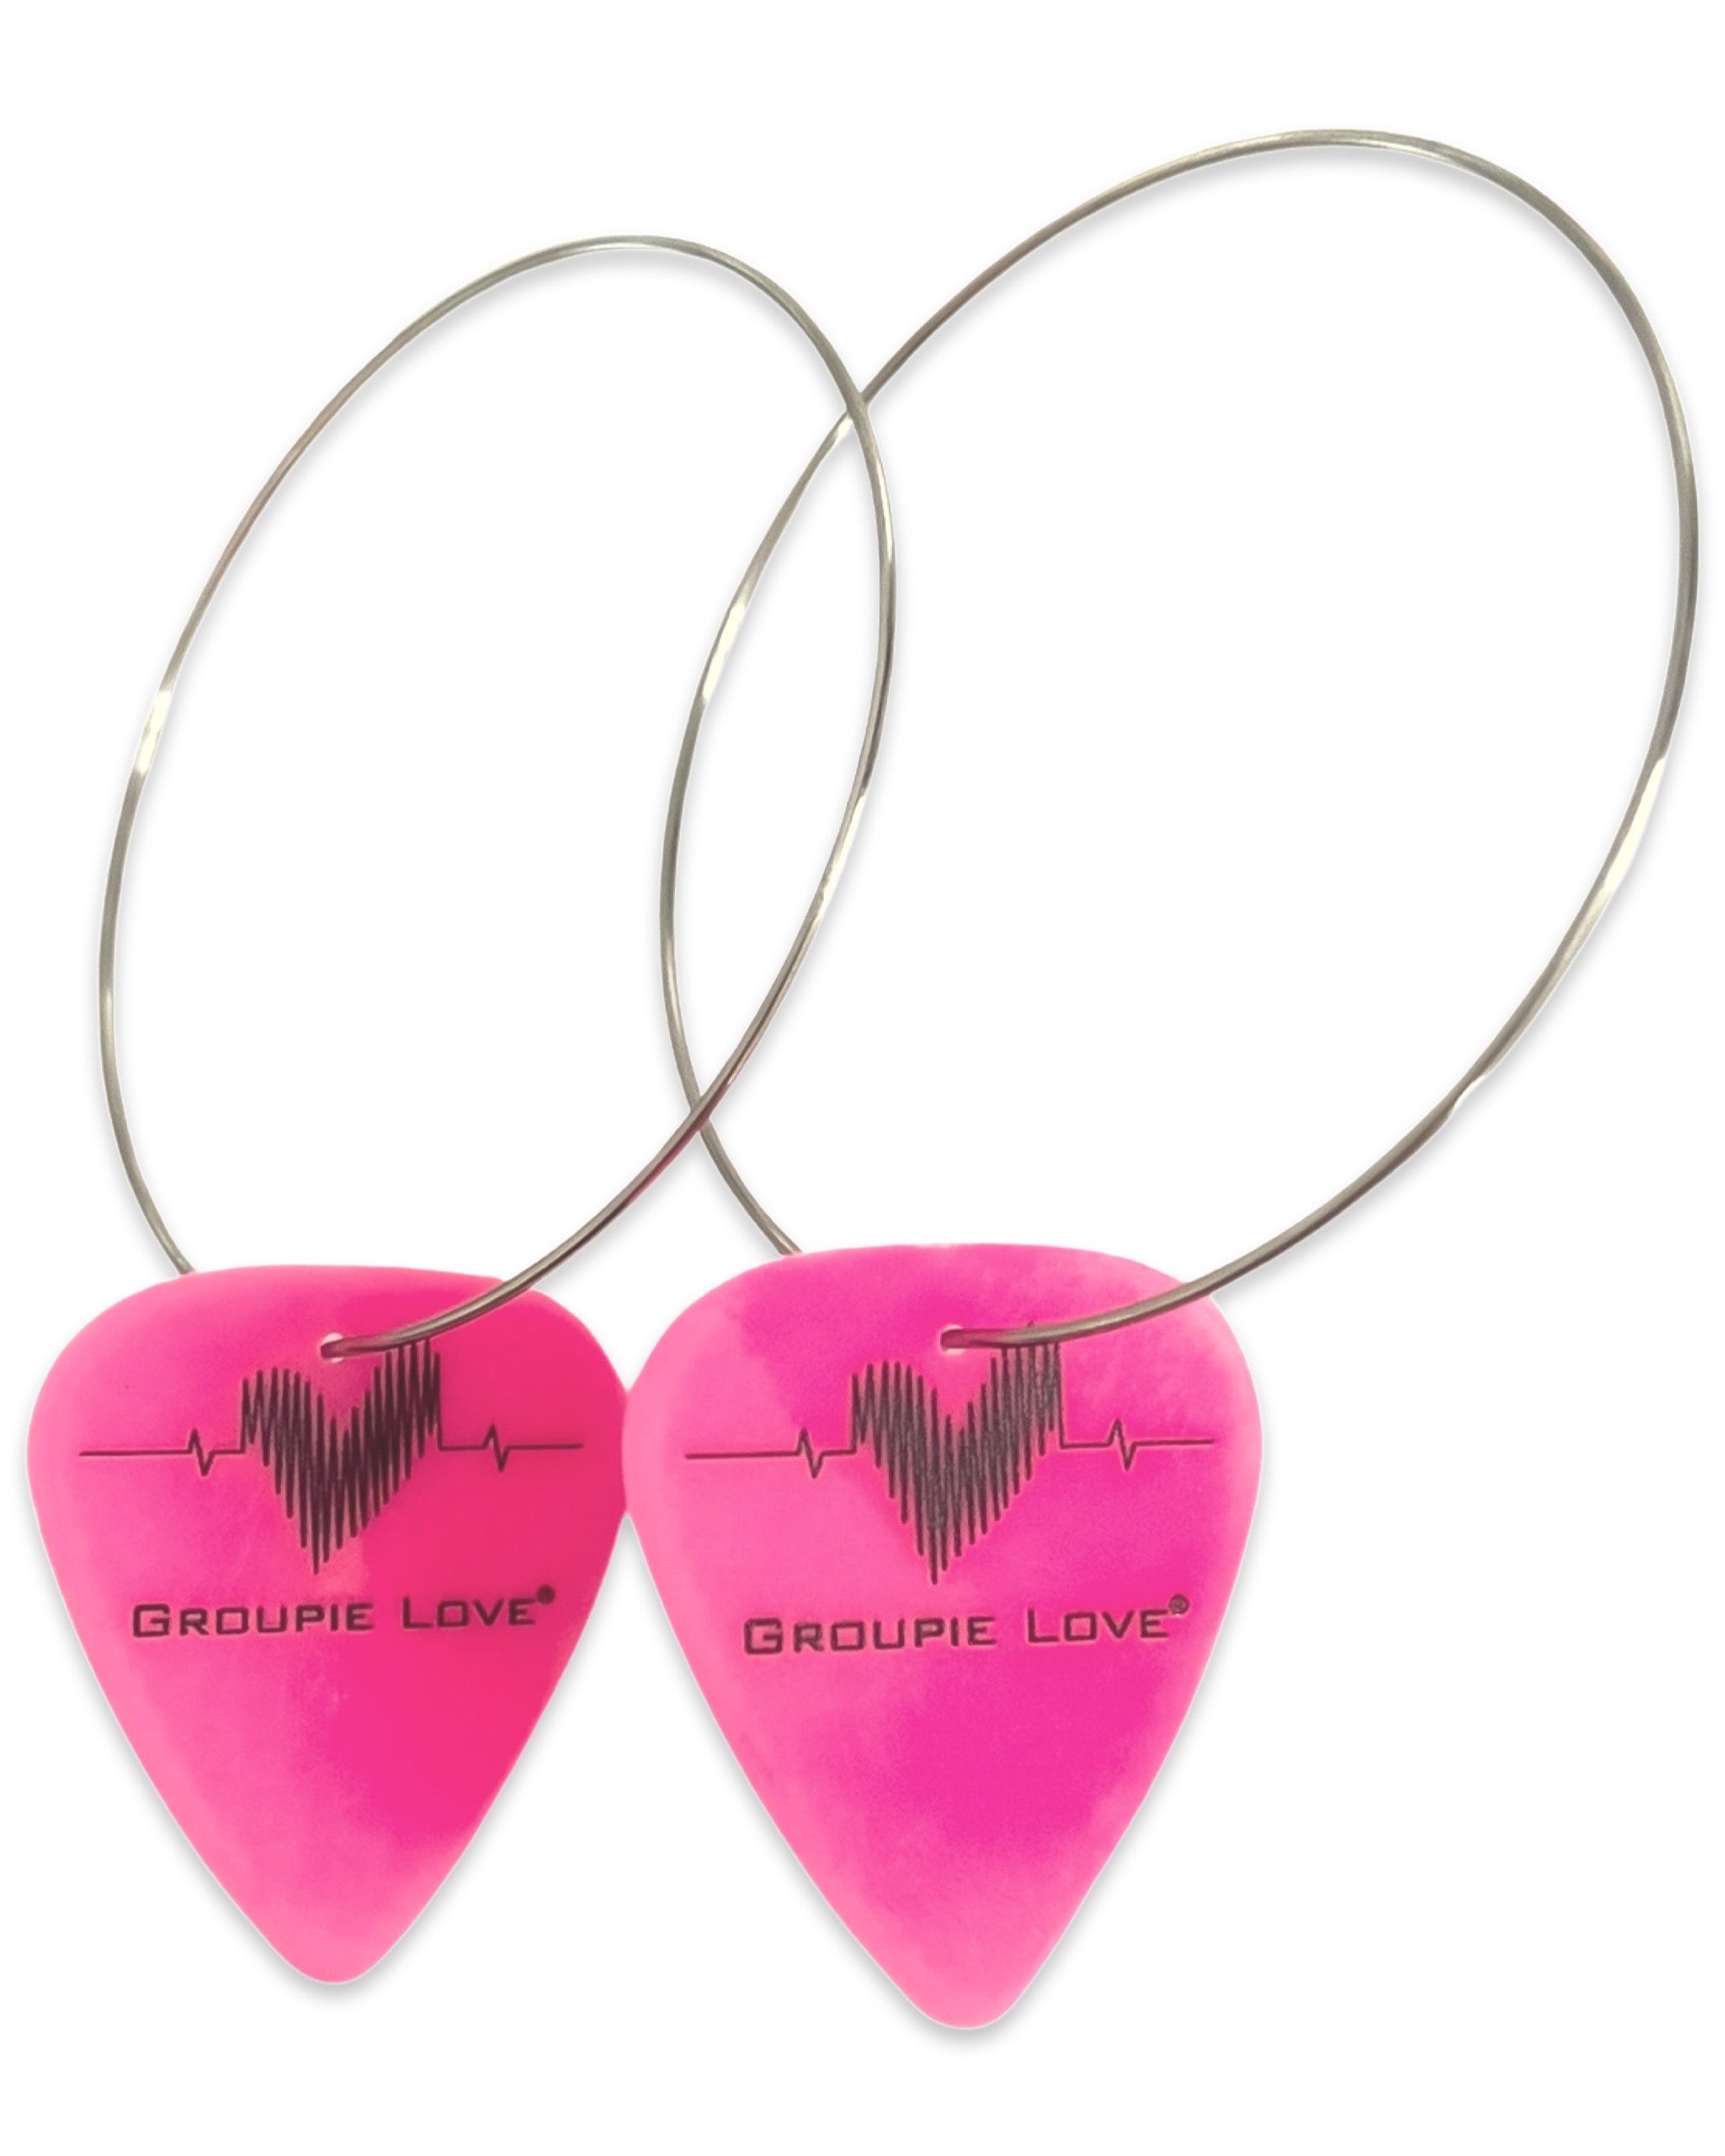 Groupie Love Neon Pink Single Guitar Pick Earrings